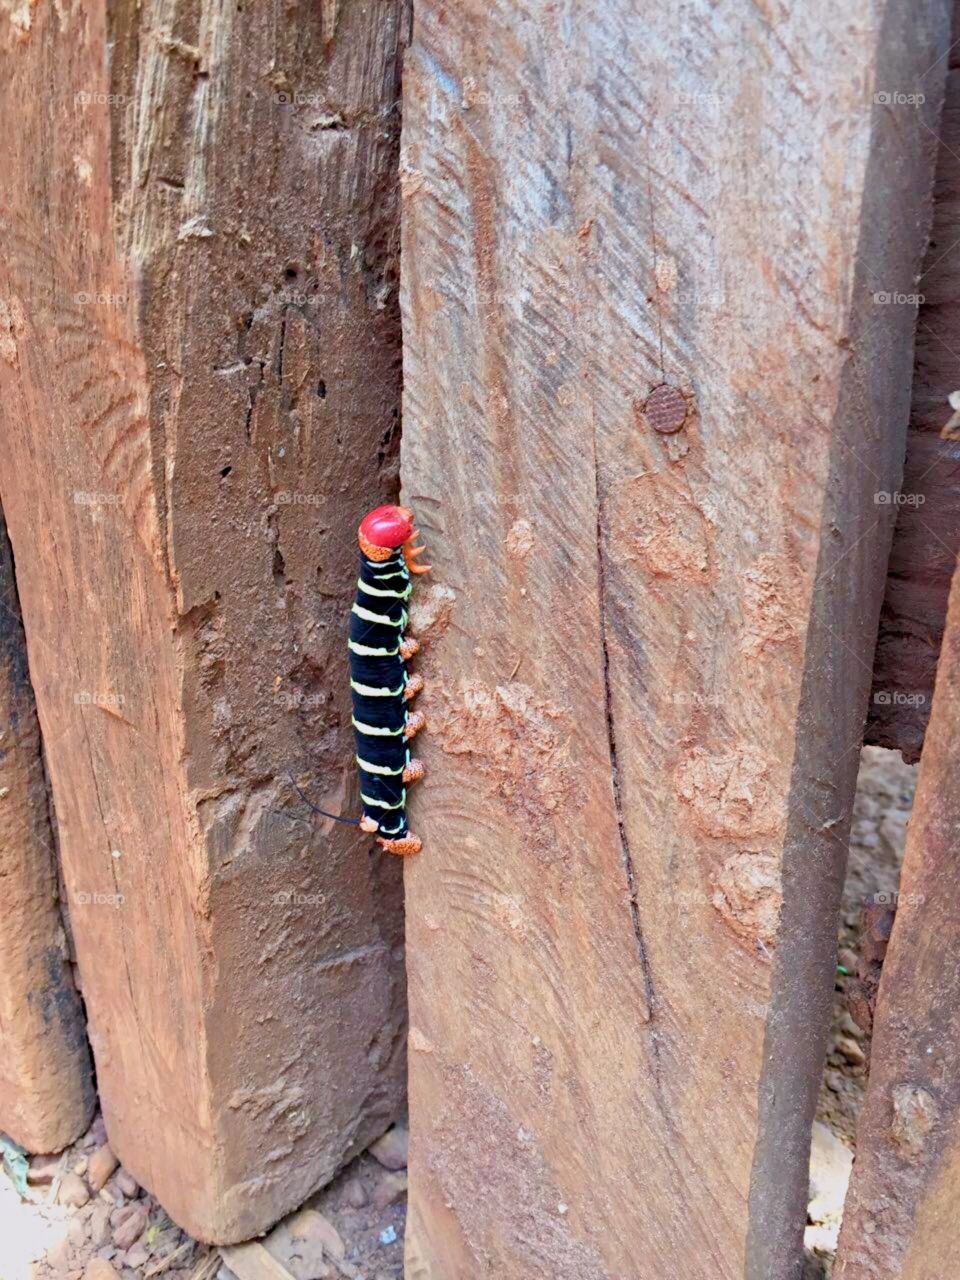 Strange caterpillar